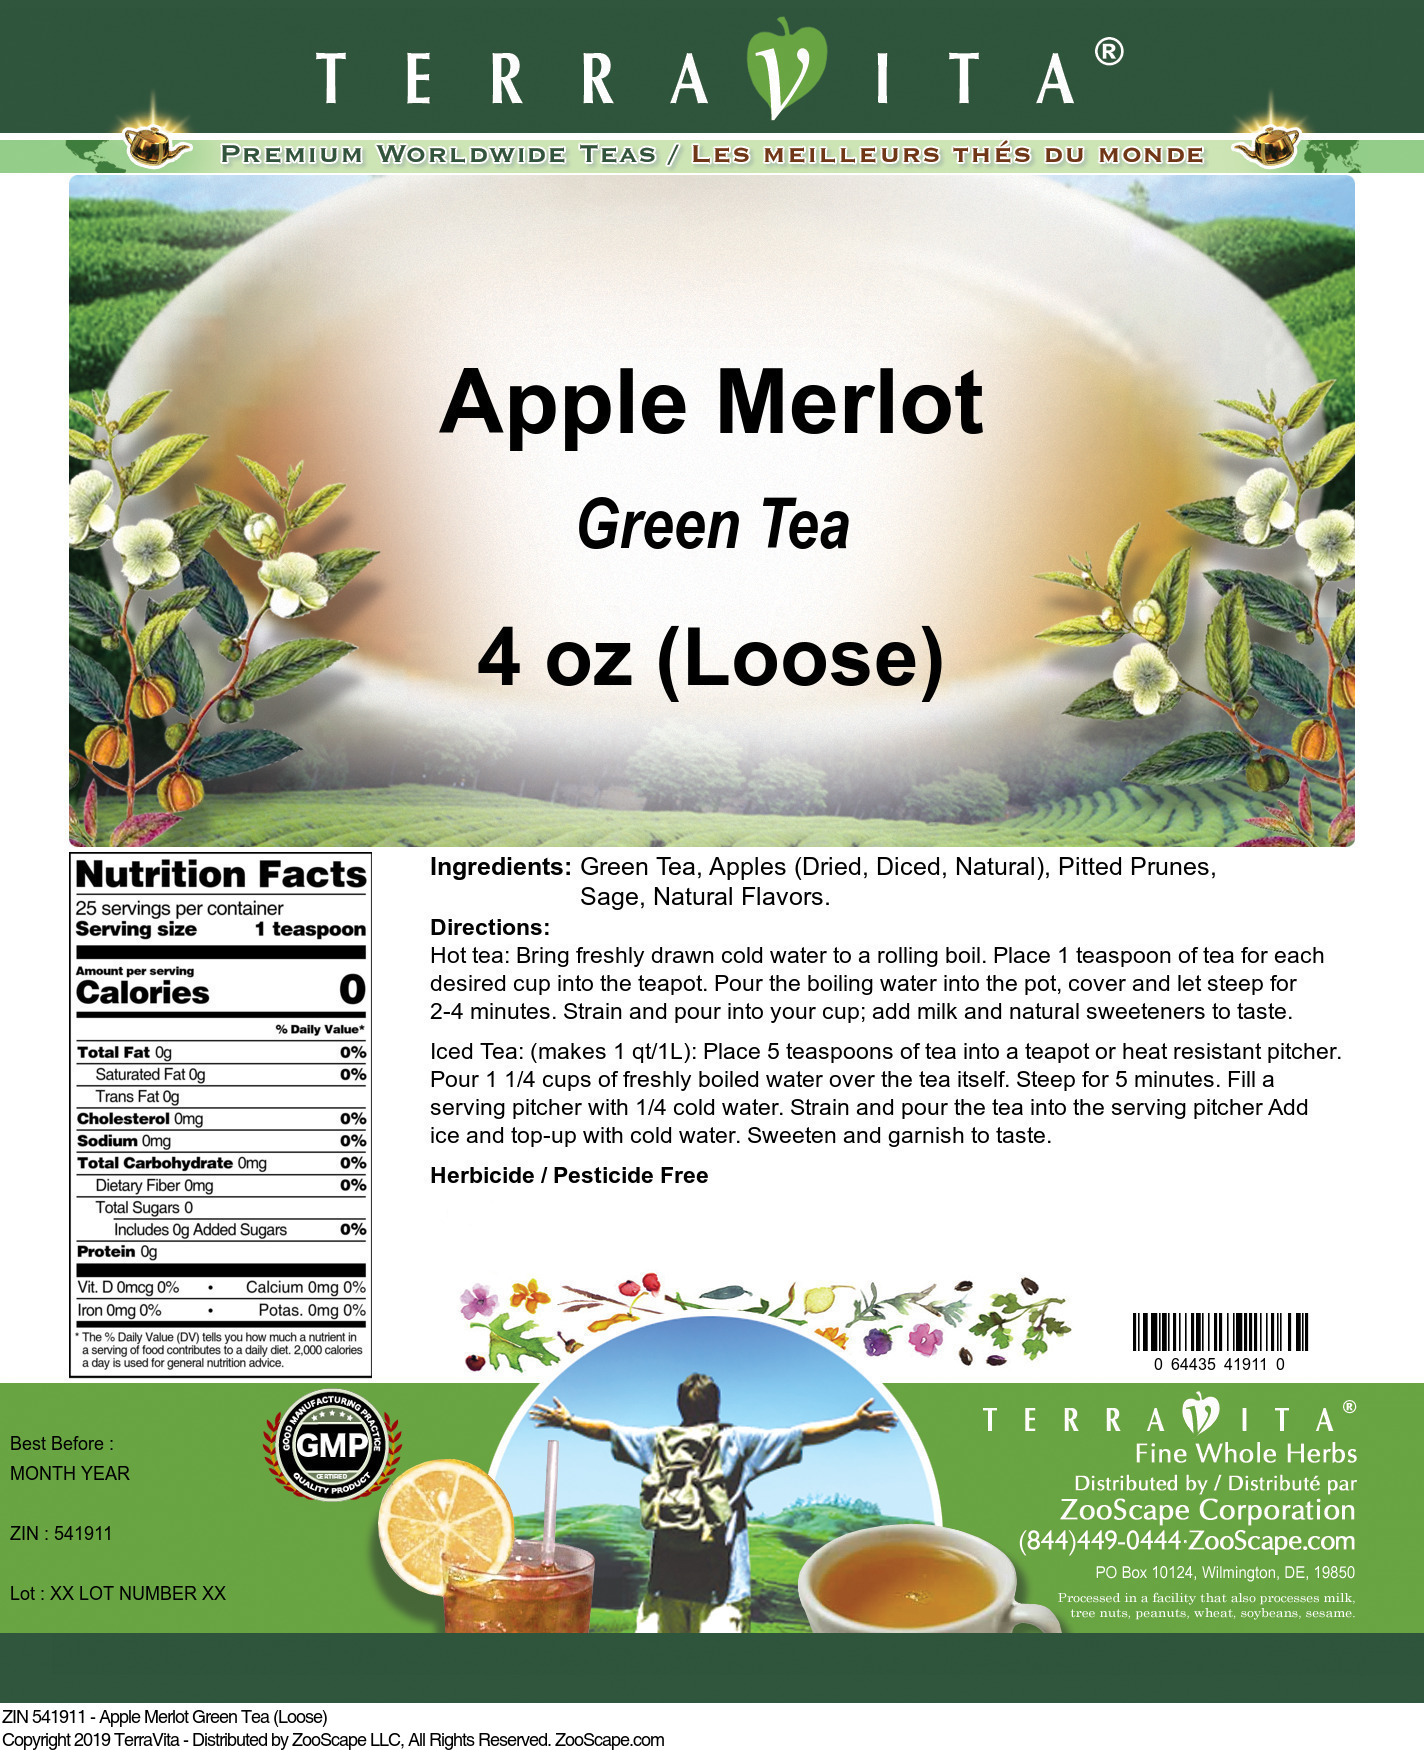 Apple Merlot Green Tea (Loose) - Label